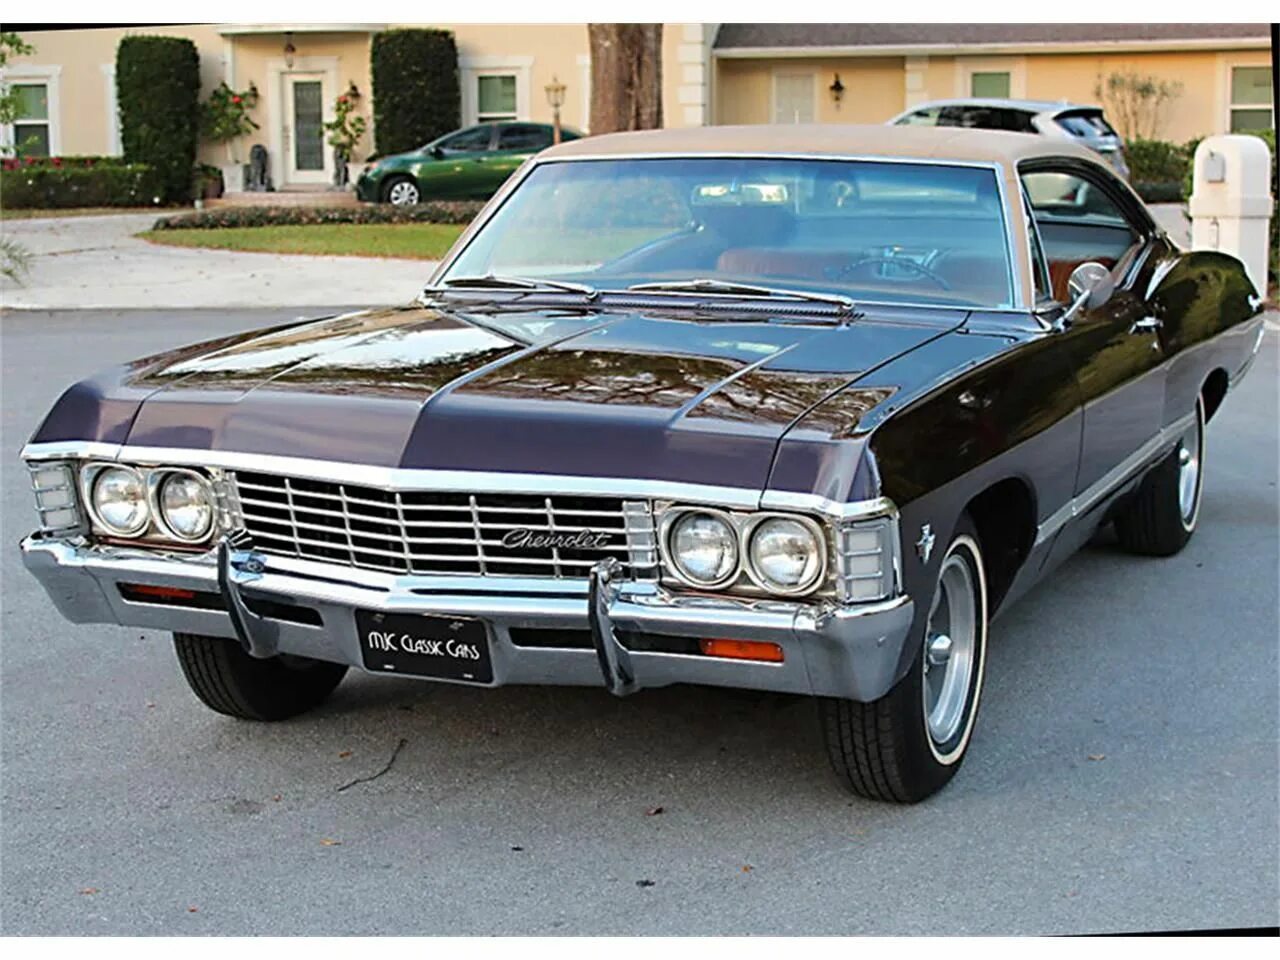 Chevrolet impala год. Chevrolet Impala 1967. Shavrale Tempala 1967. Chevrolet Импала 1967. Chevrolet Impala 67.